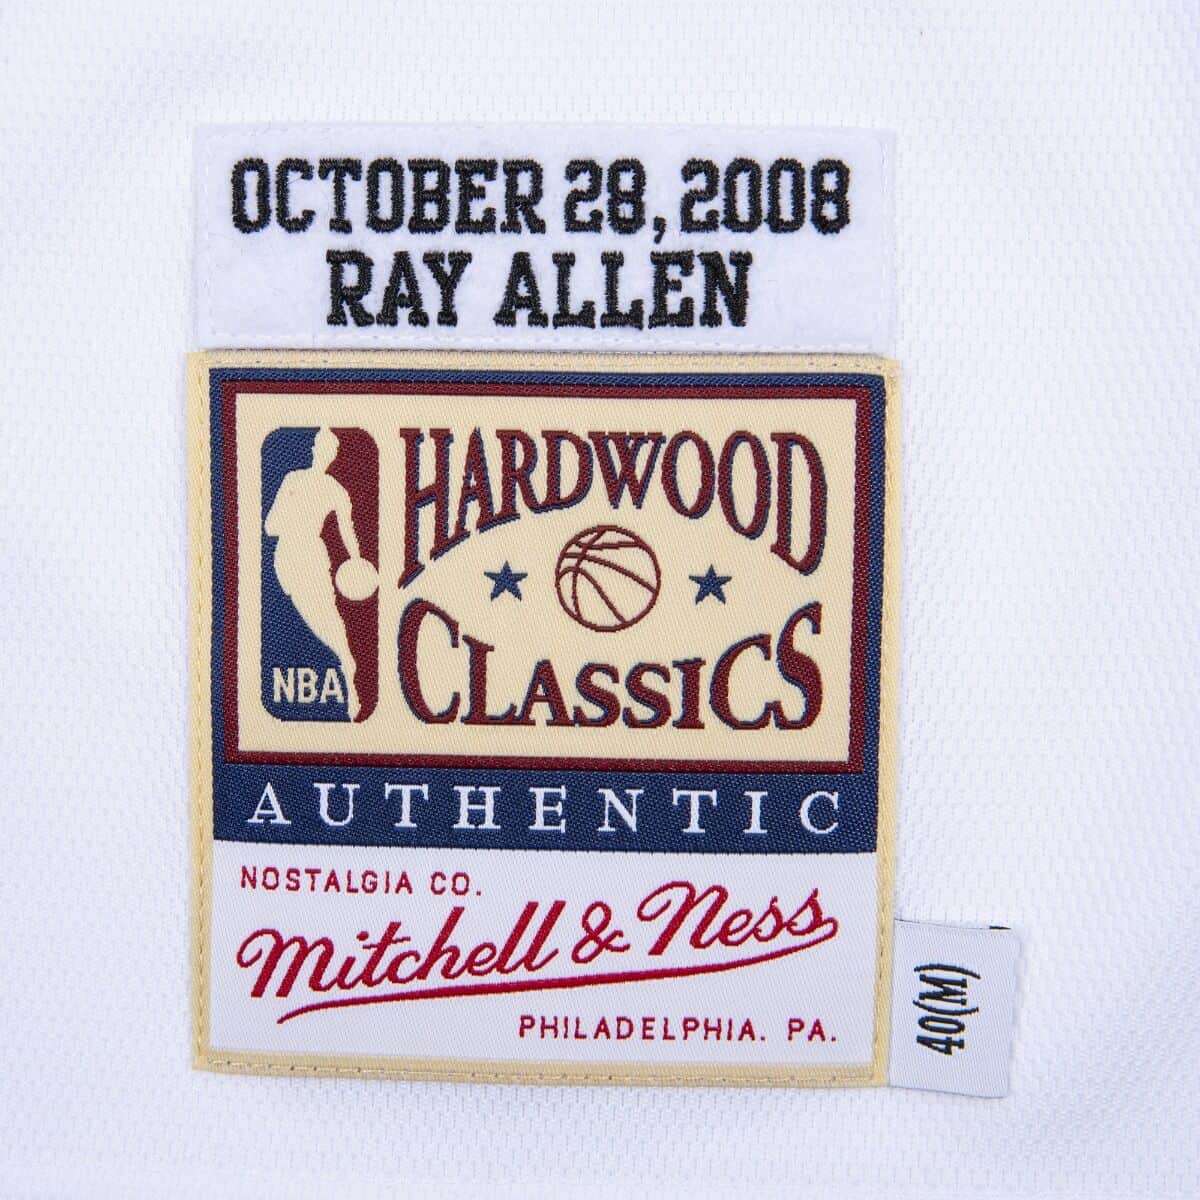 Authentic Jersey Boston Celtics 2008-09 Ray Allen